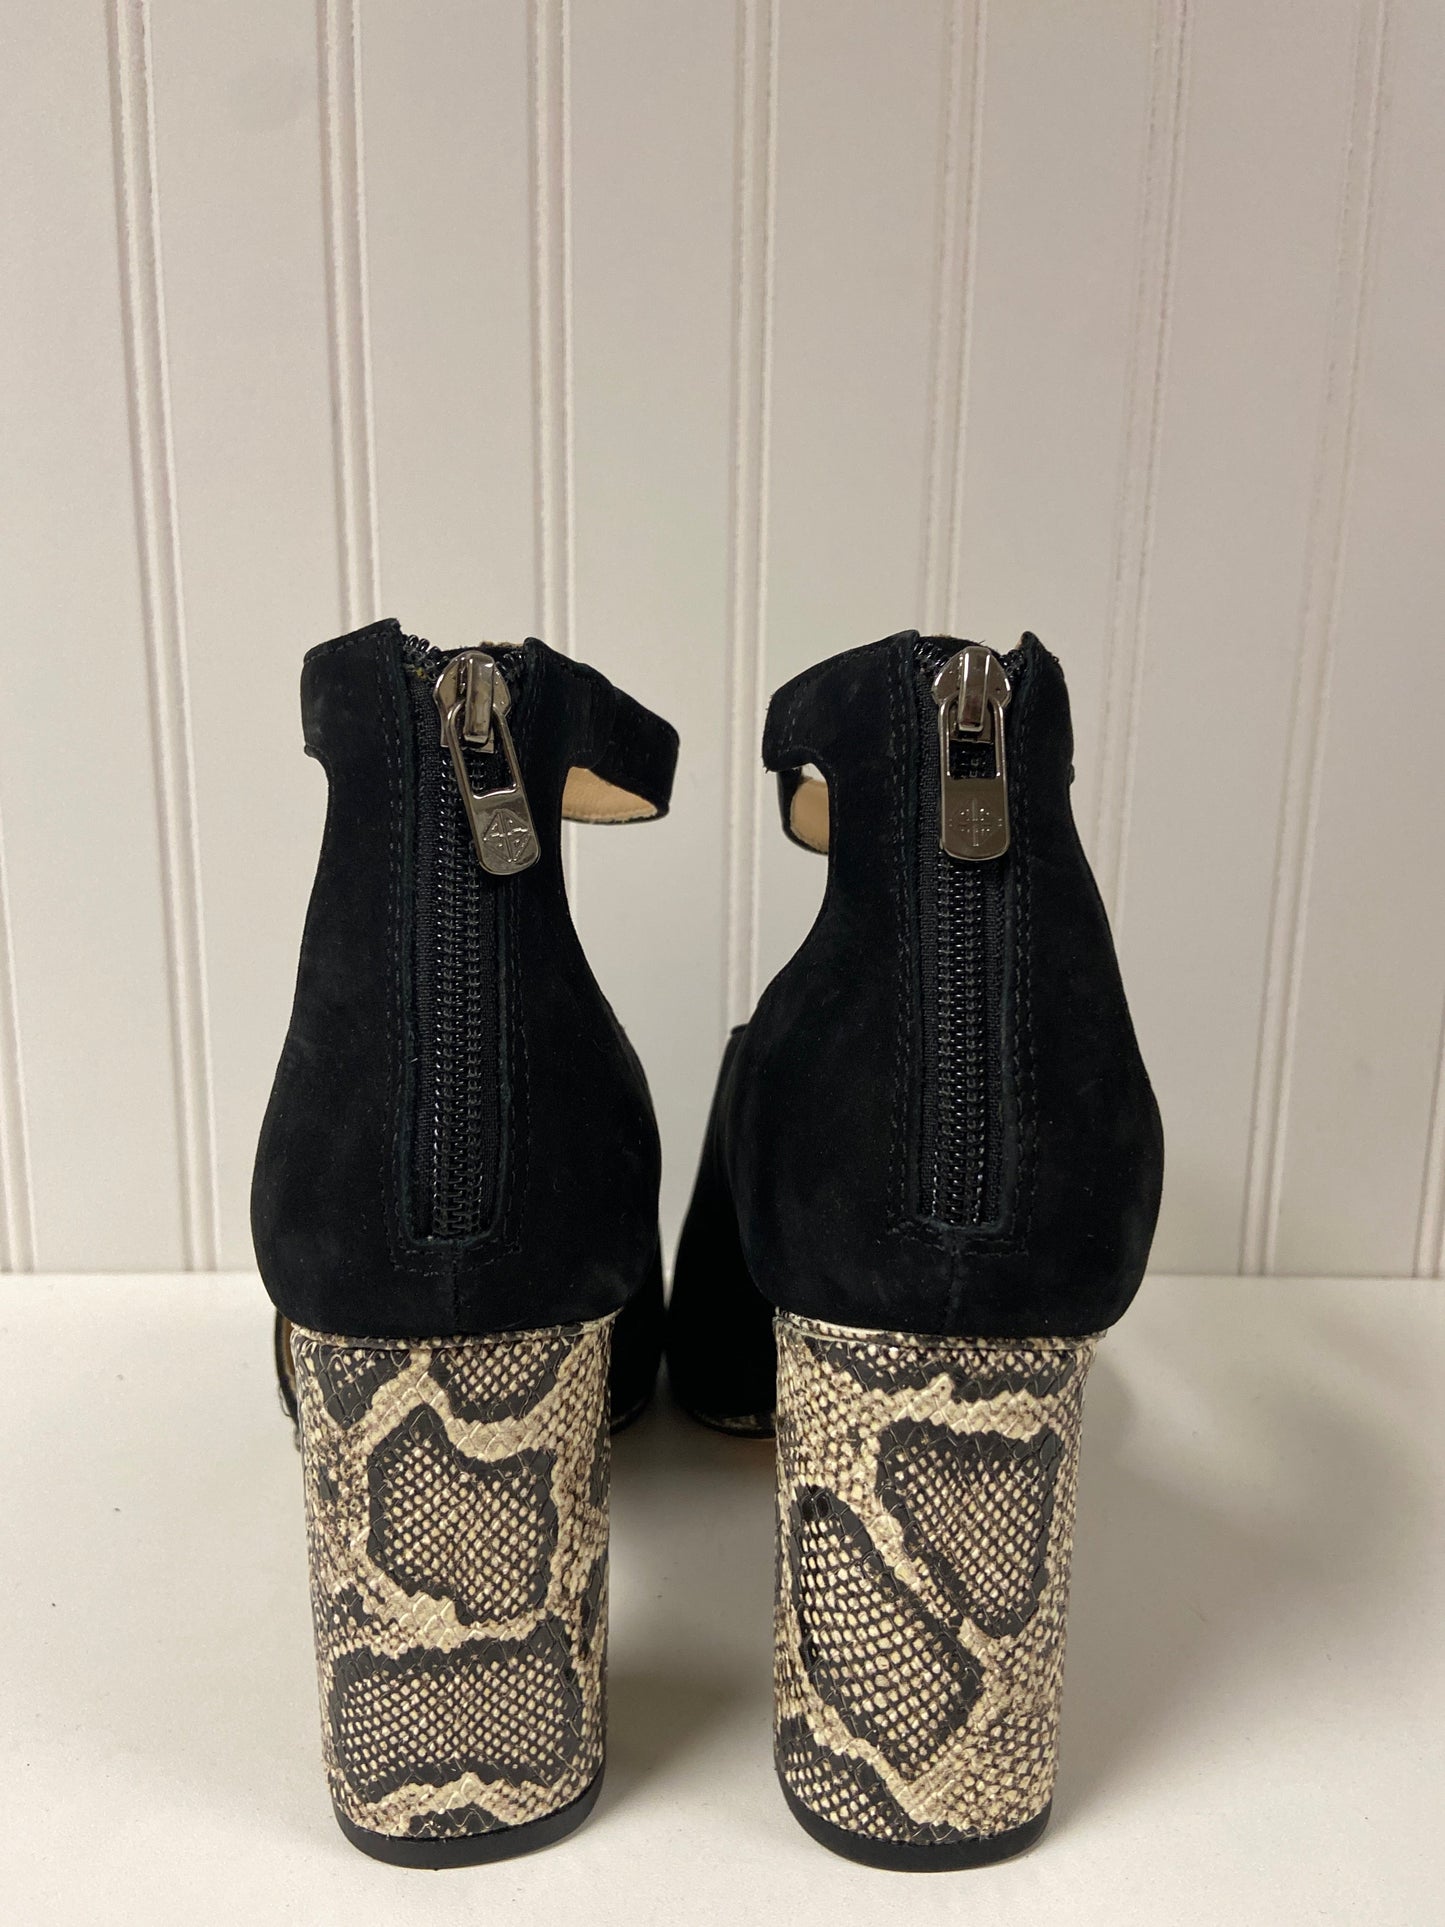 Snakeskin Print Shoes Heels Block Antonio Melani, Size 7